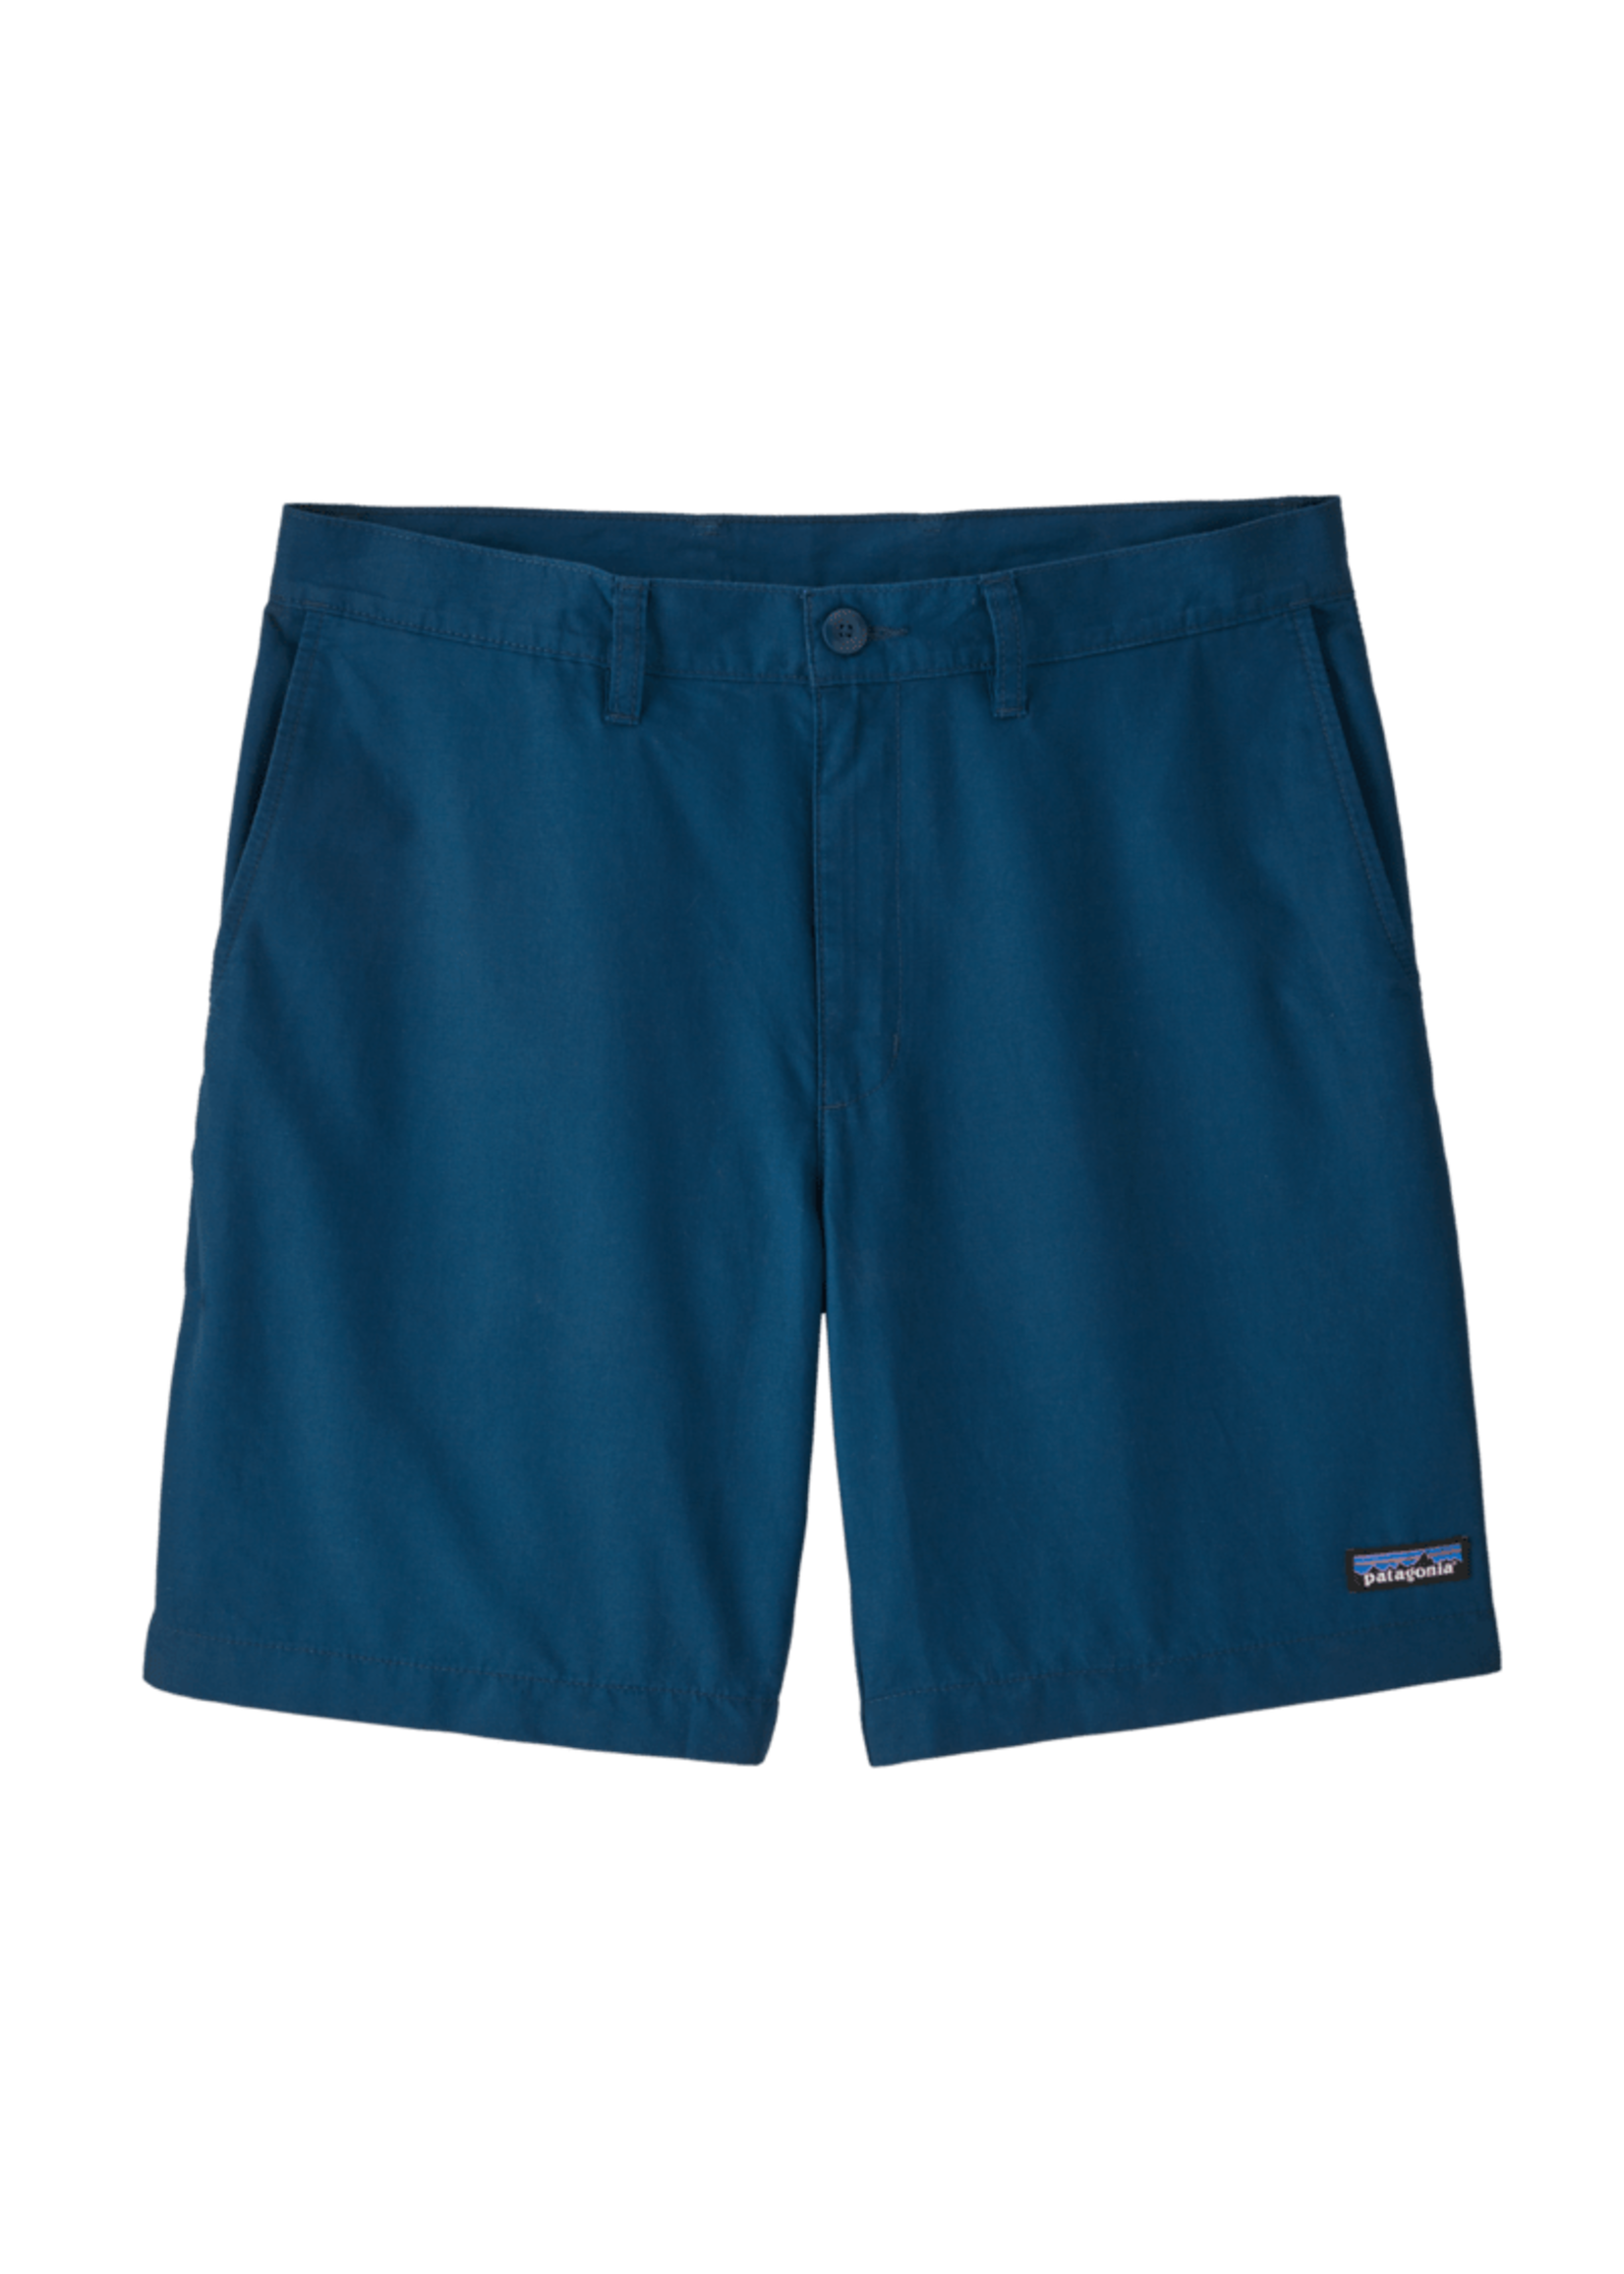 Patagonia Men's Lightweight All-Wear Hemp Shorts - 8 in. - Lagom Blue